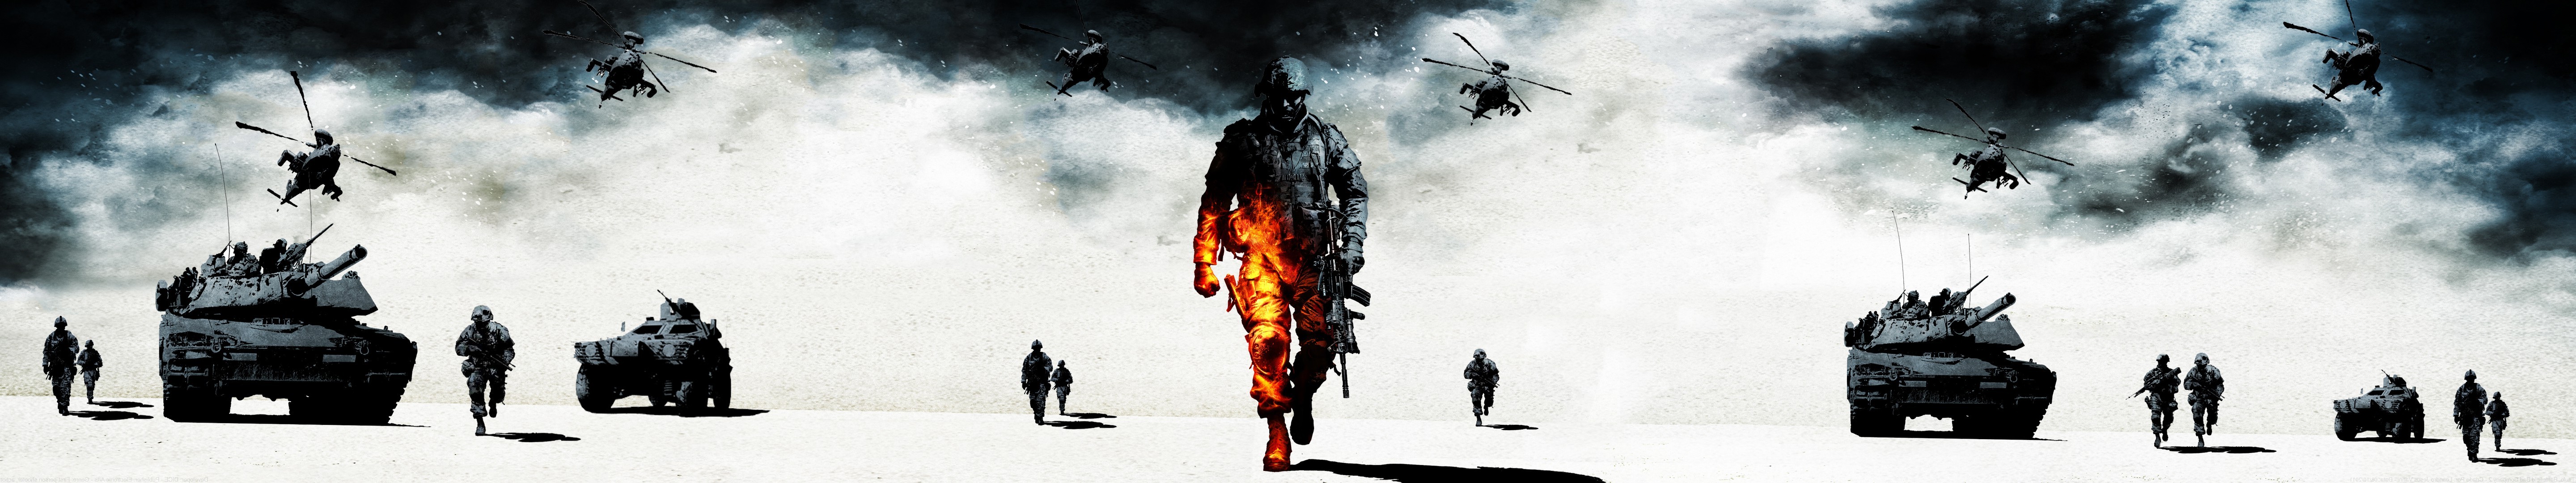 Battlefield Bad Company 2, Video Games, Soldier Wallpaper